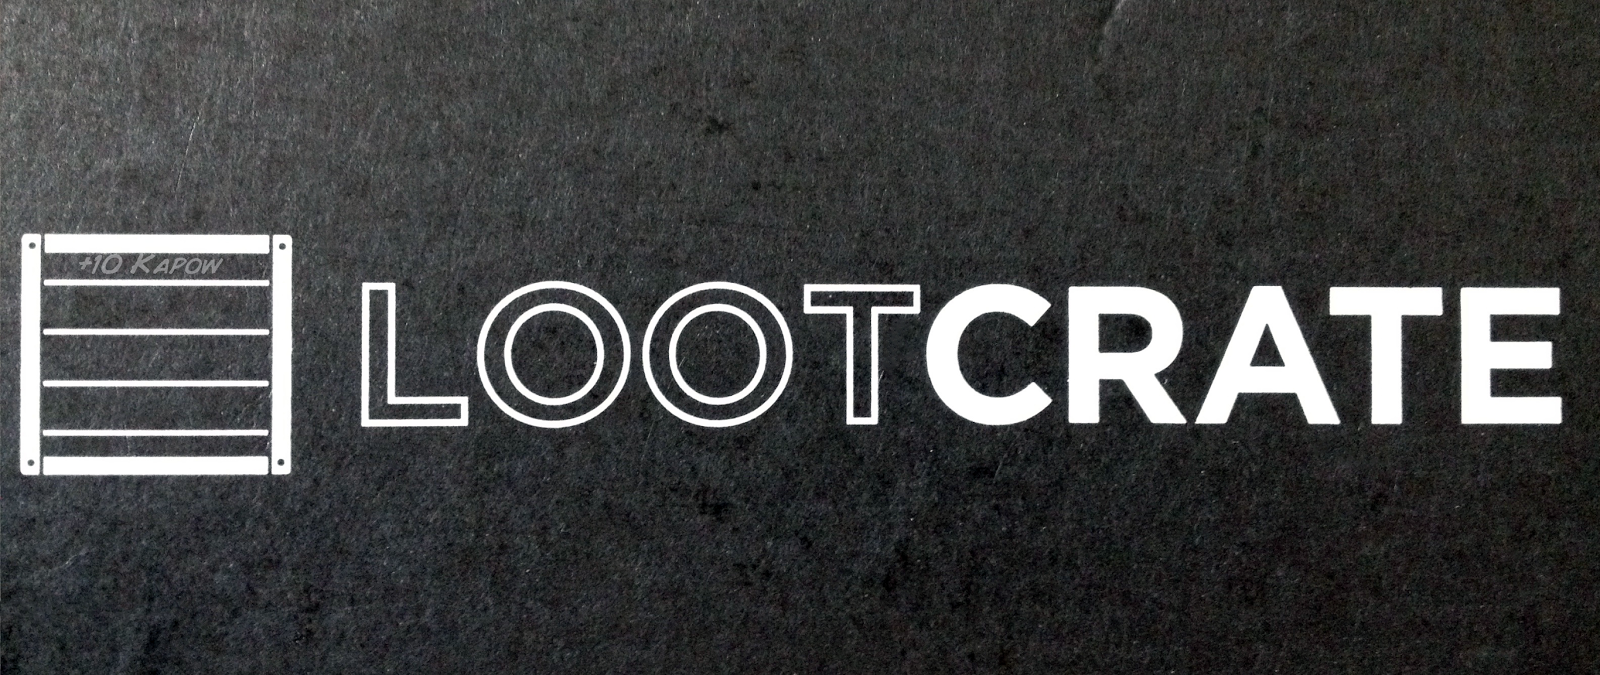 Lootcrate logo